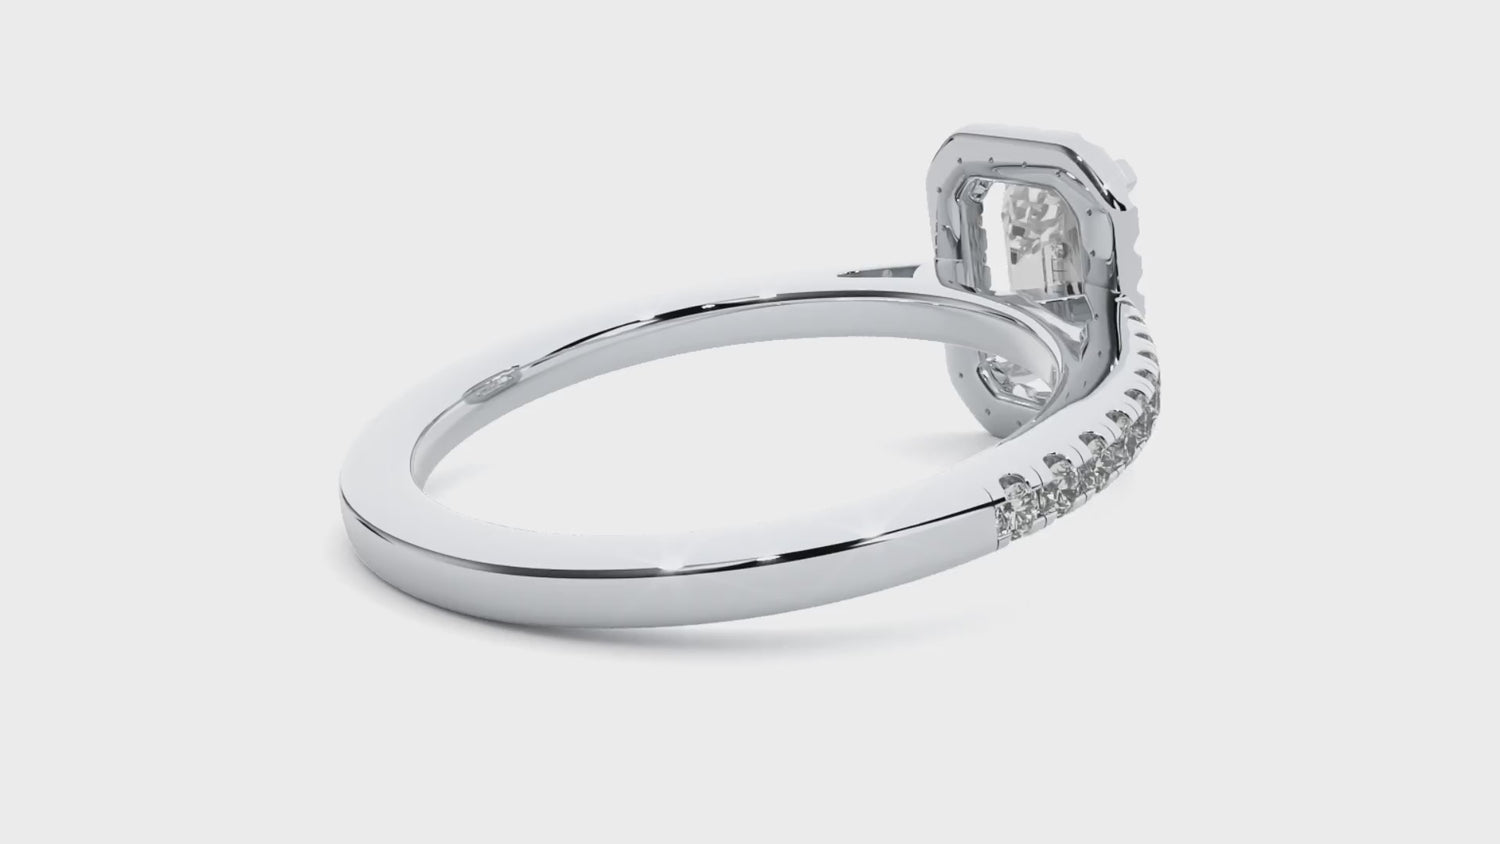 HOH Angelica Diamond Halo Ring